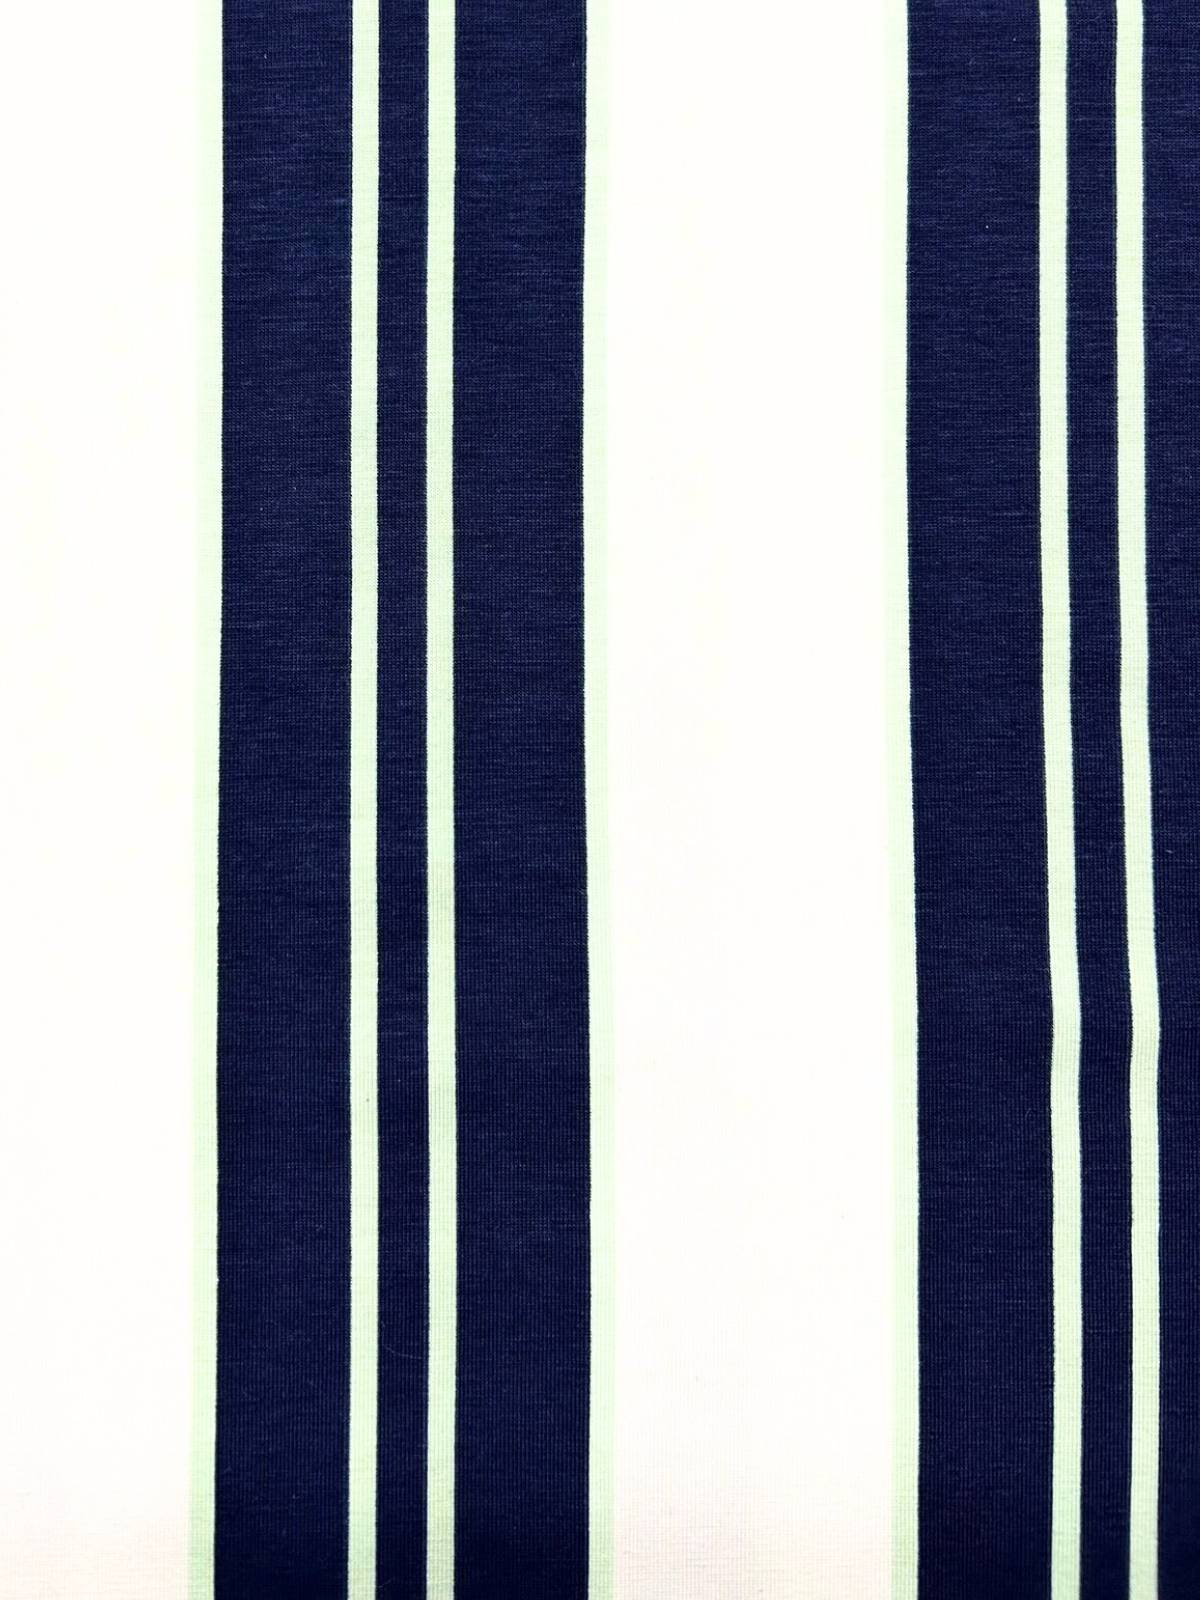 Bermuda Stripe Cotton L/S Tee - Navy/Green